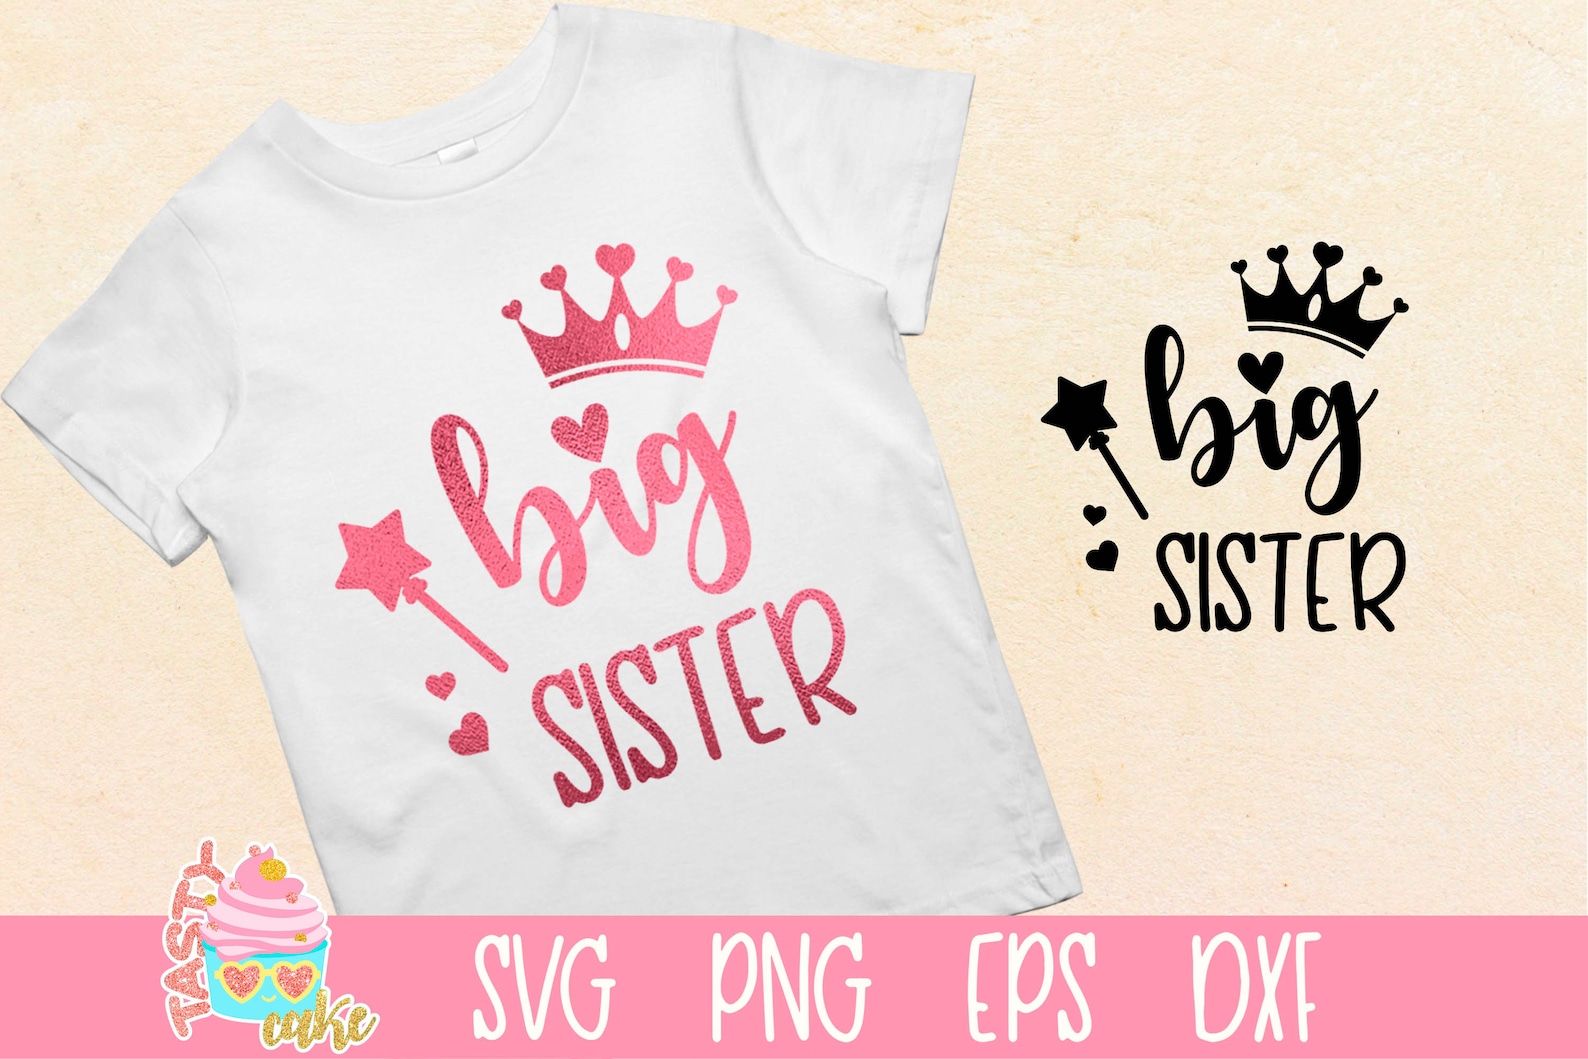 She sister перевод. Big sister надпись. Старшая сестренка принт. Big sister little sister шаблон для печати. Надпись best big sister.